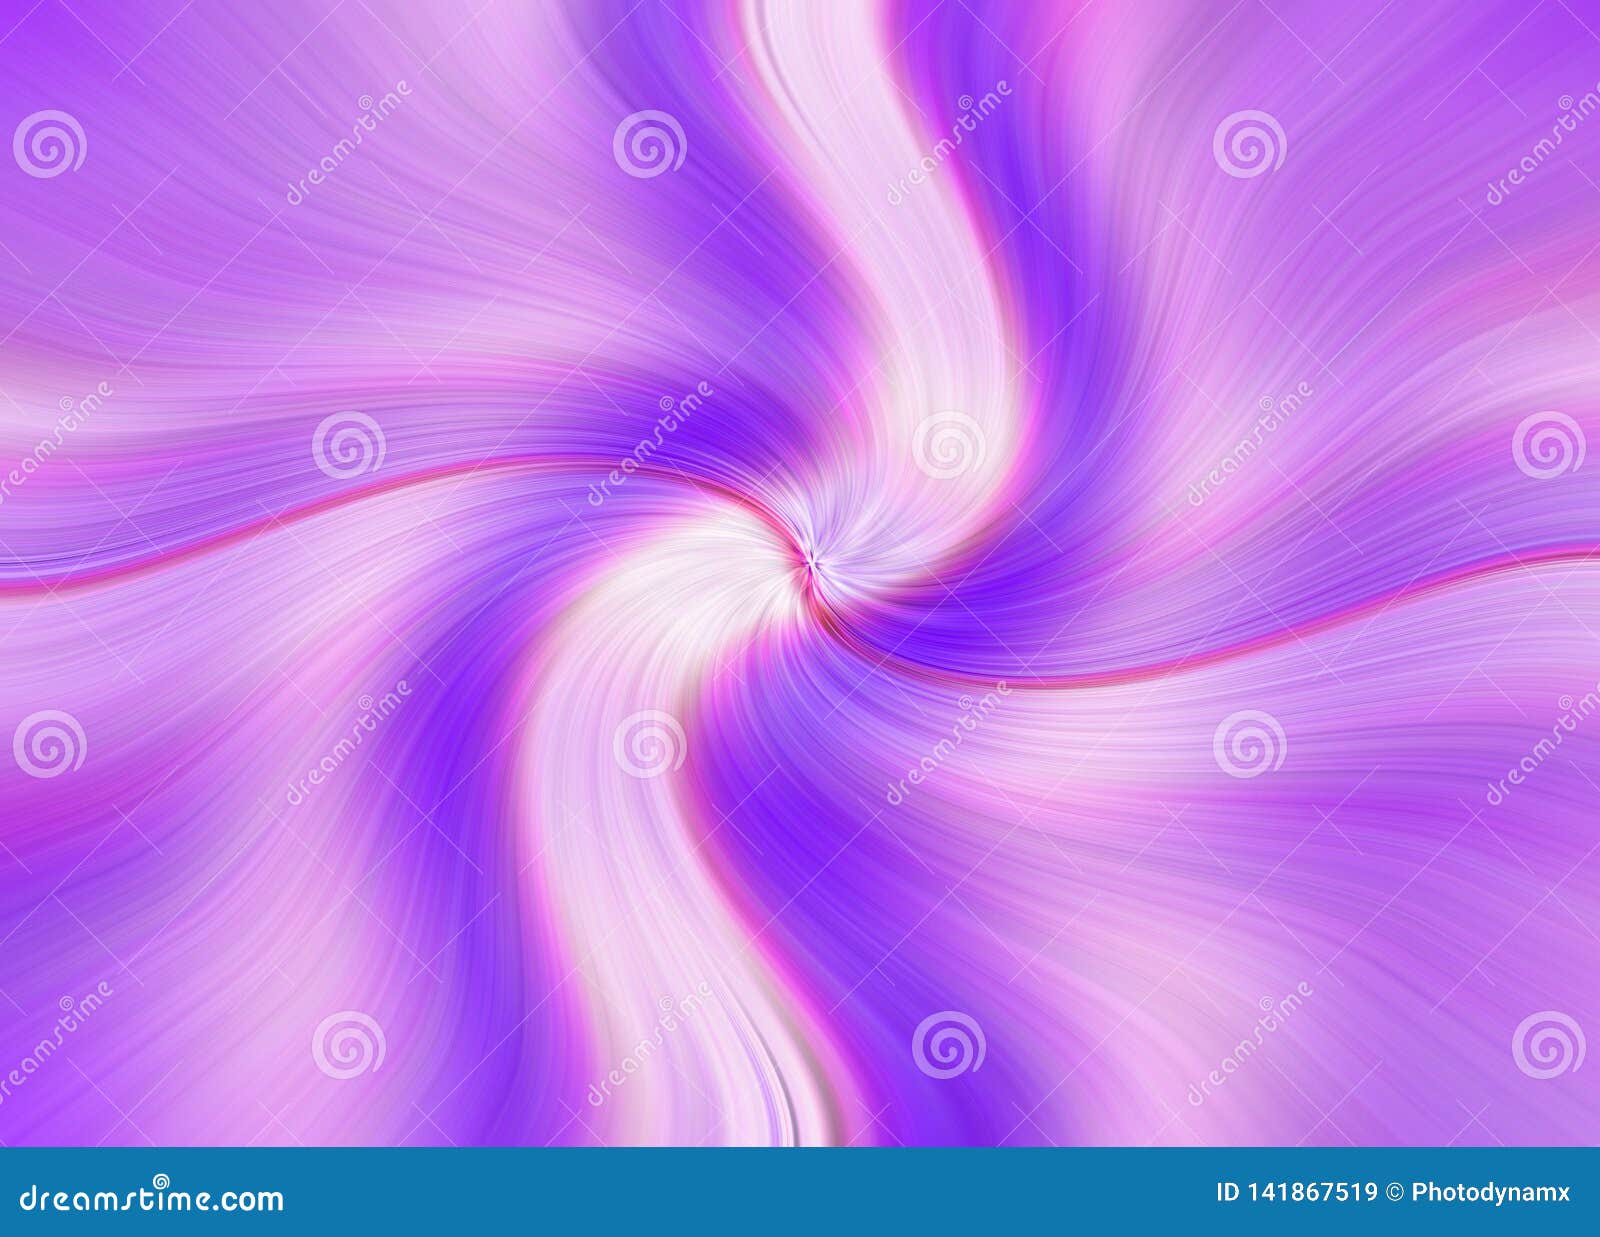 backgrounds twirl swirl twisting cyclone vortex vertigo pattern patterns template